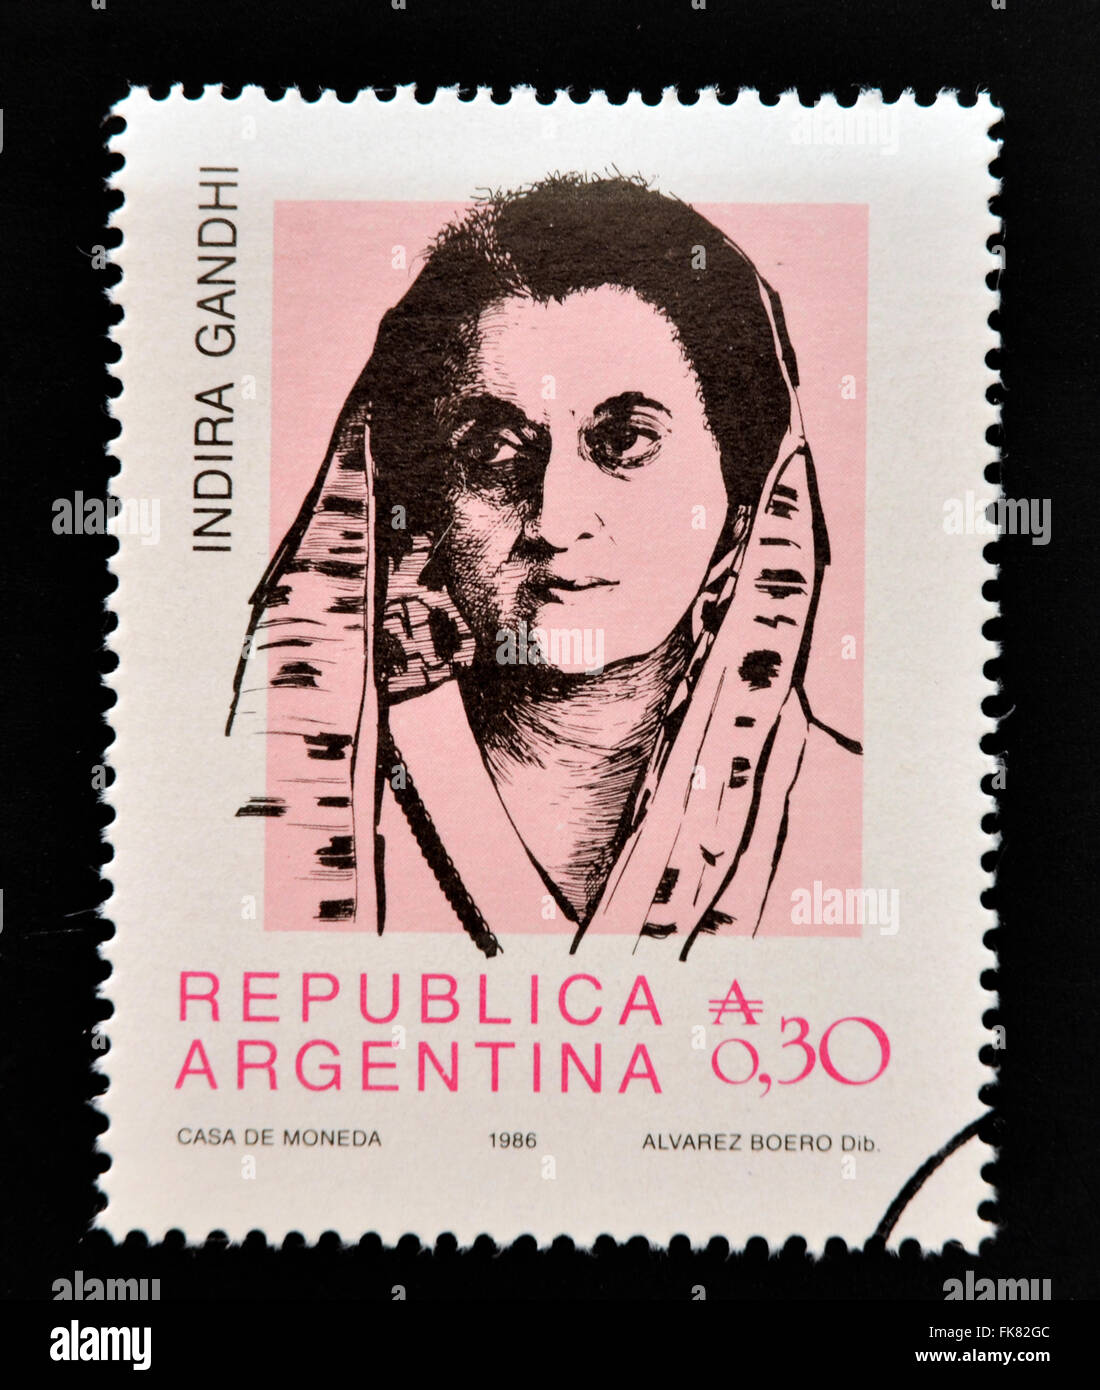 Argentine - VERS 1986 : timbres en Argentine montre Indira Gandhi, vers 1986 Banque D'Images